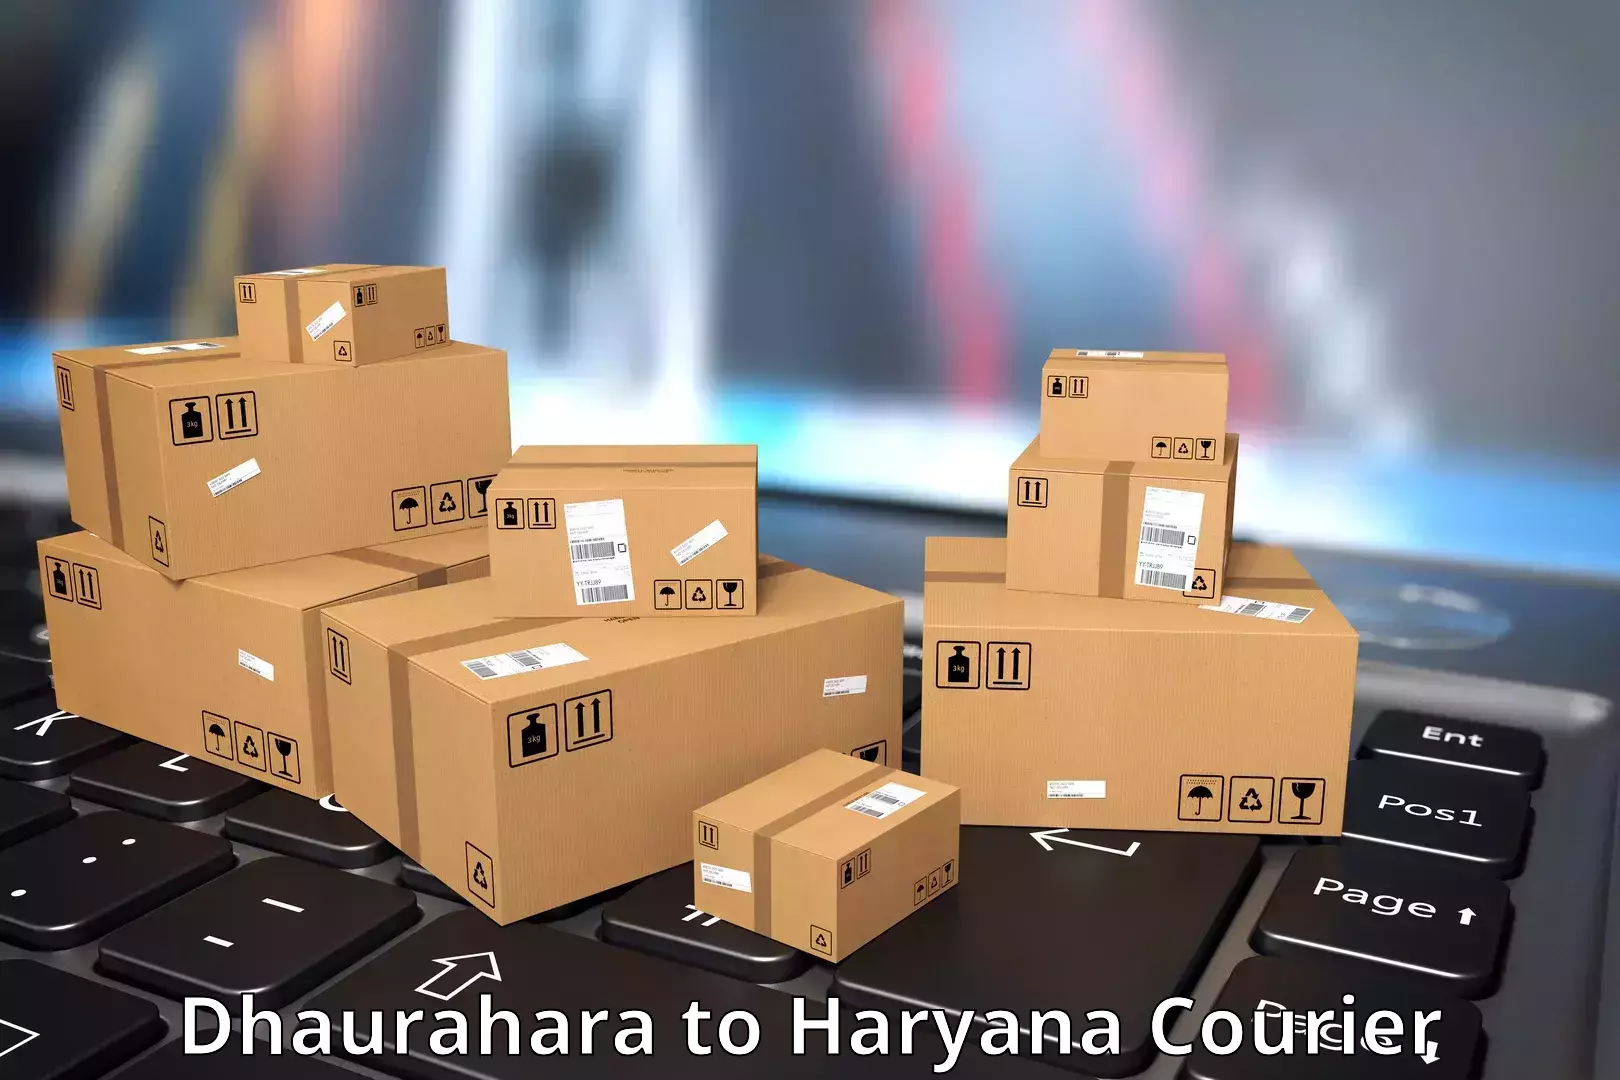 Courier service innovation Dhaurahara to Haryana